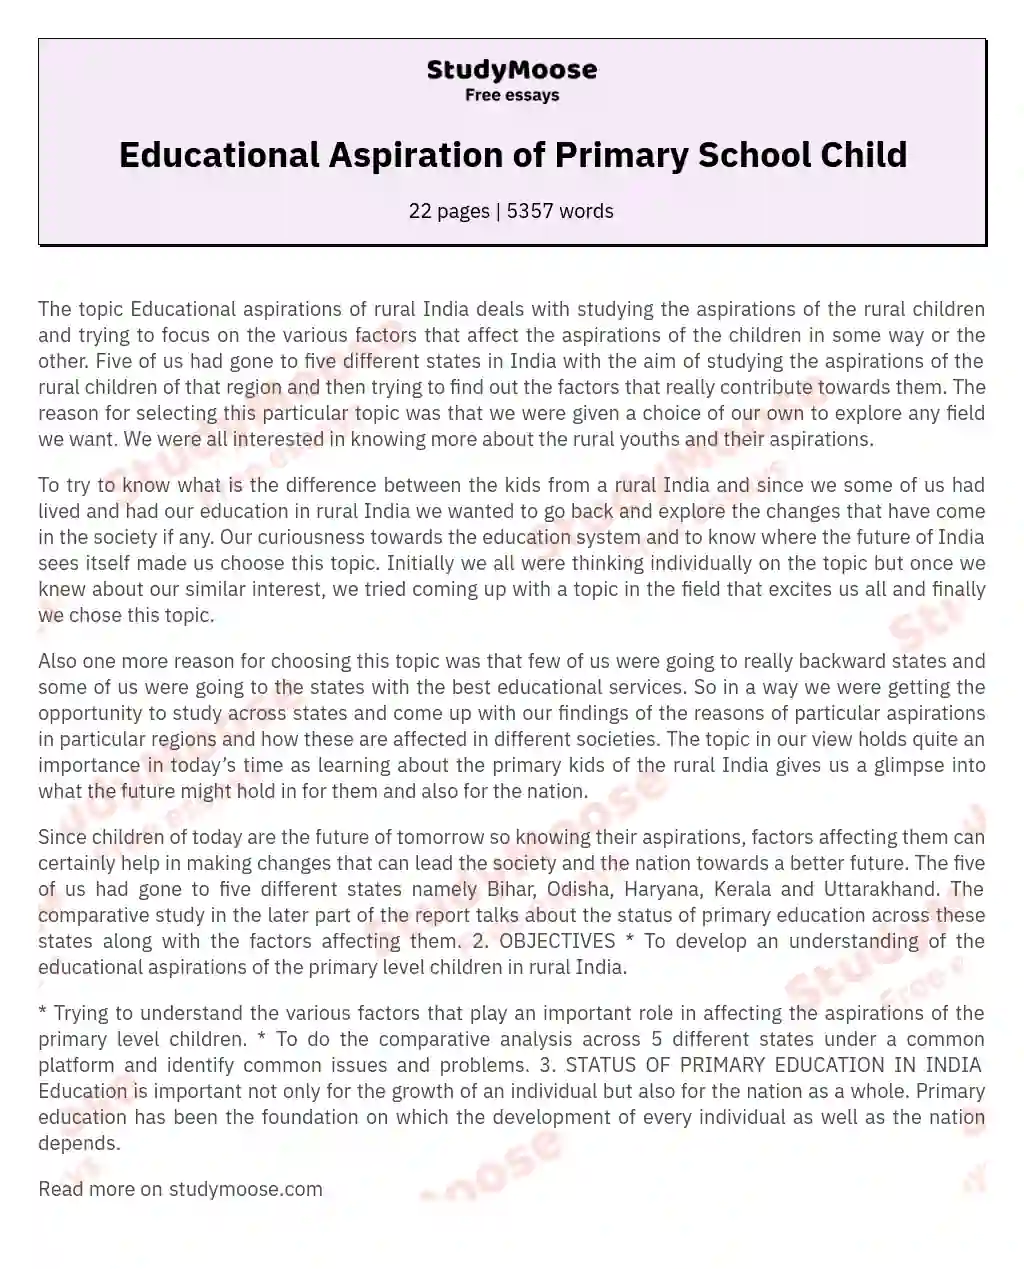 Educational Aspiration of Primary School Child essay